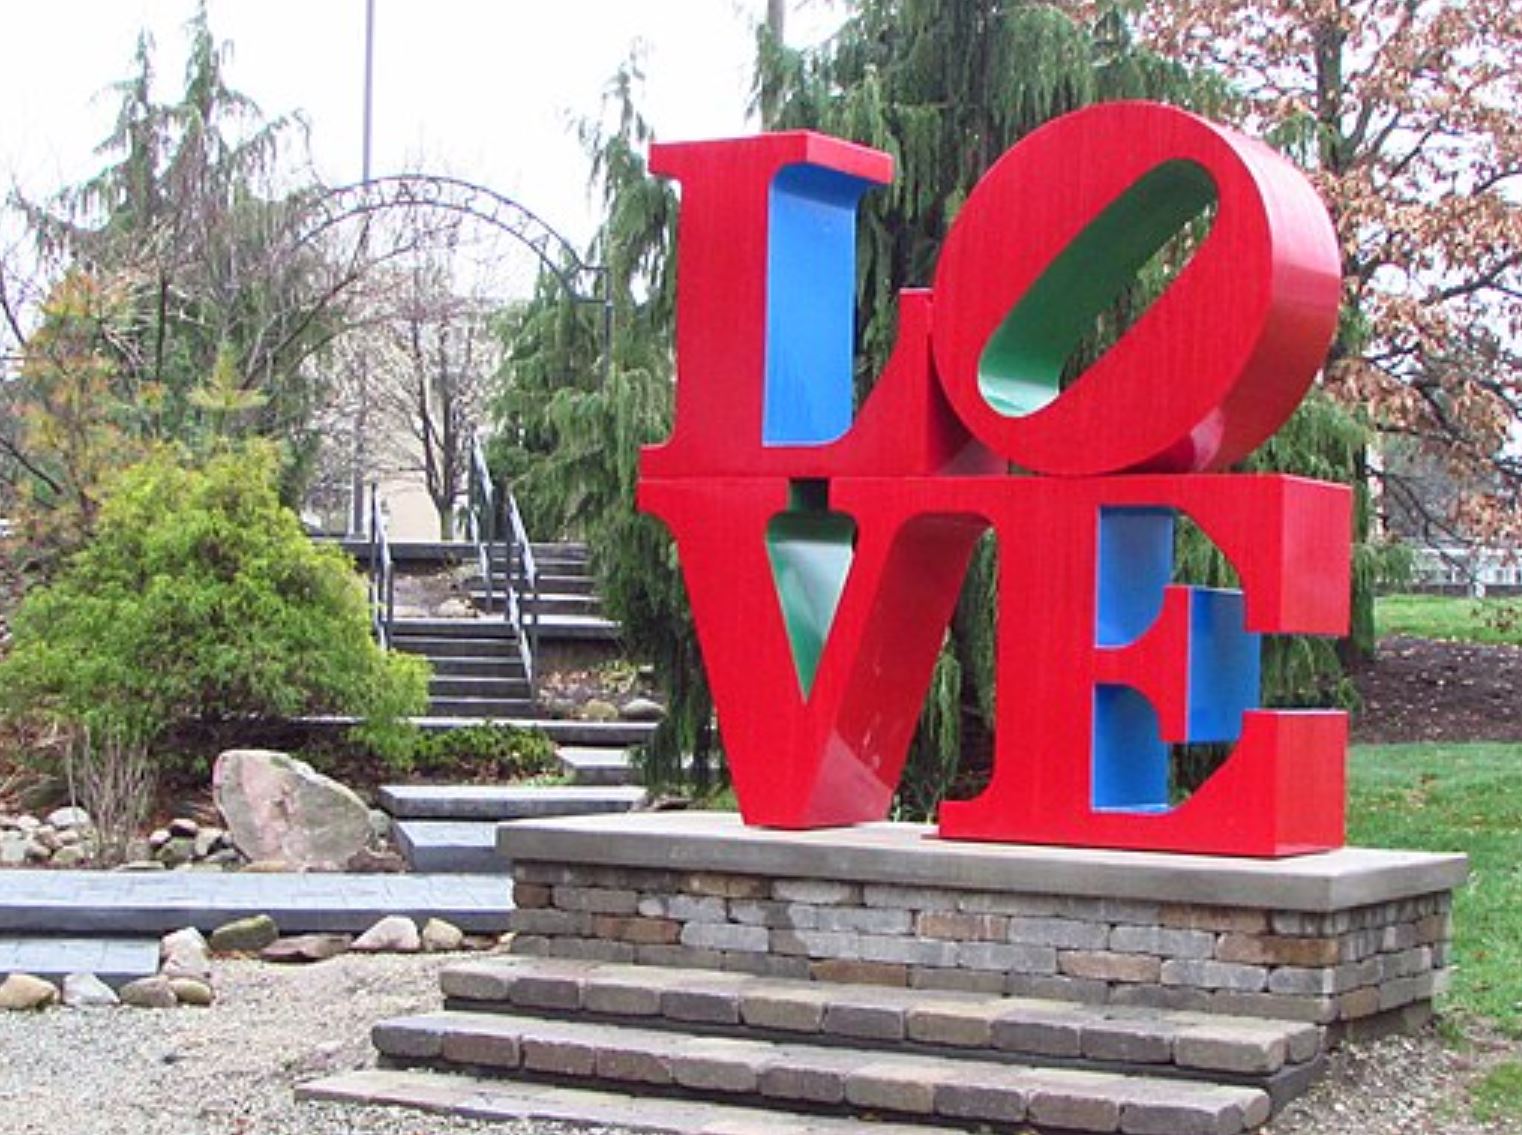 LOVE sculpture in a park